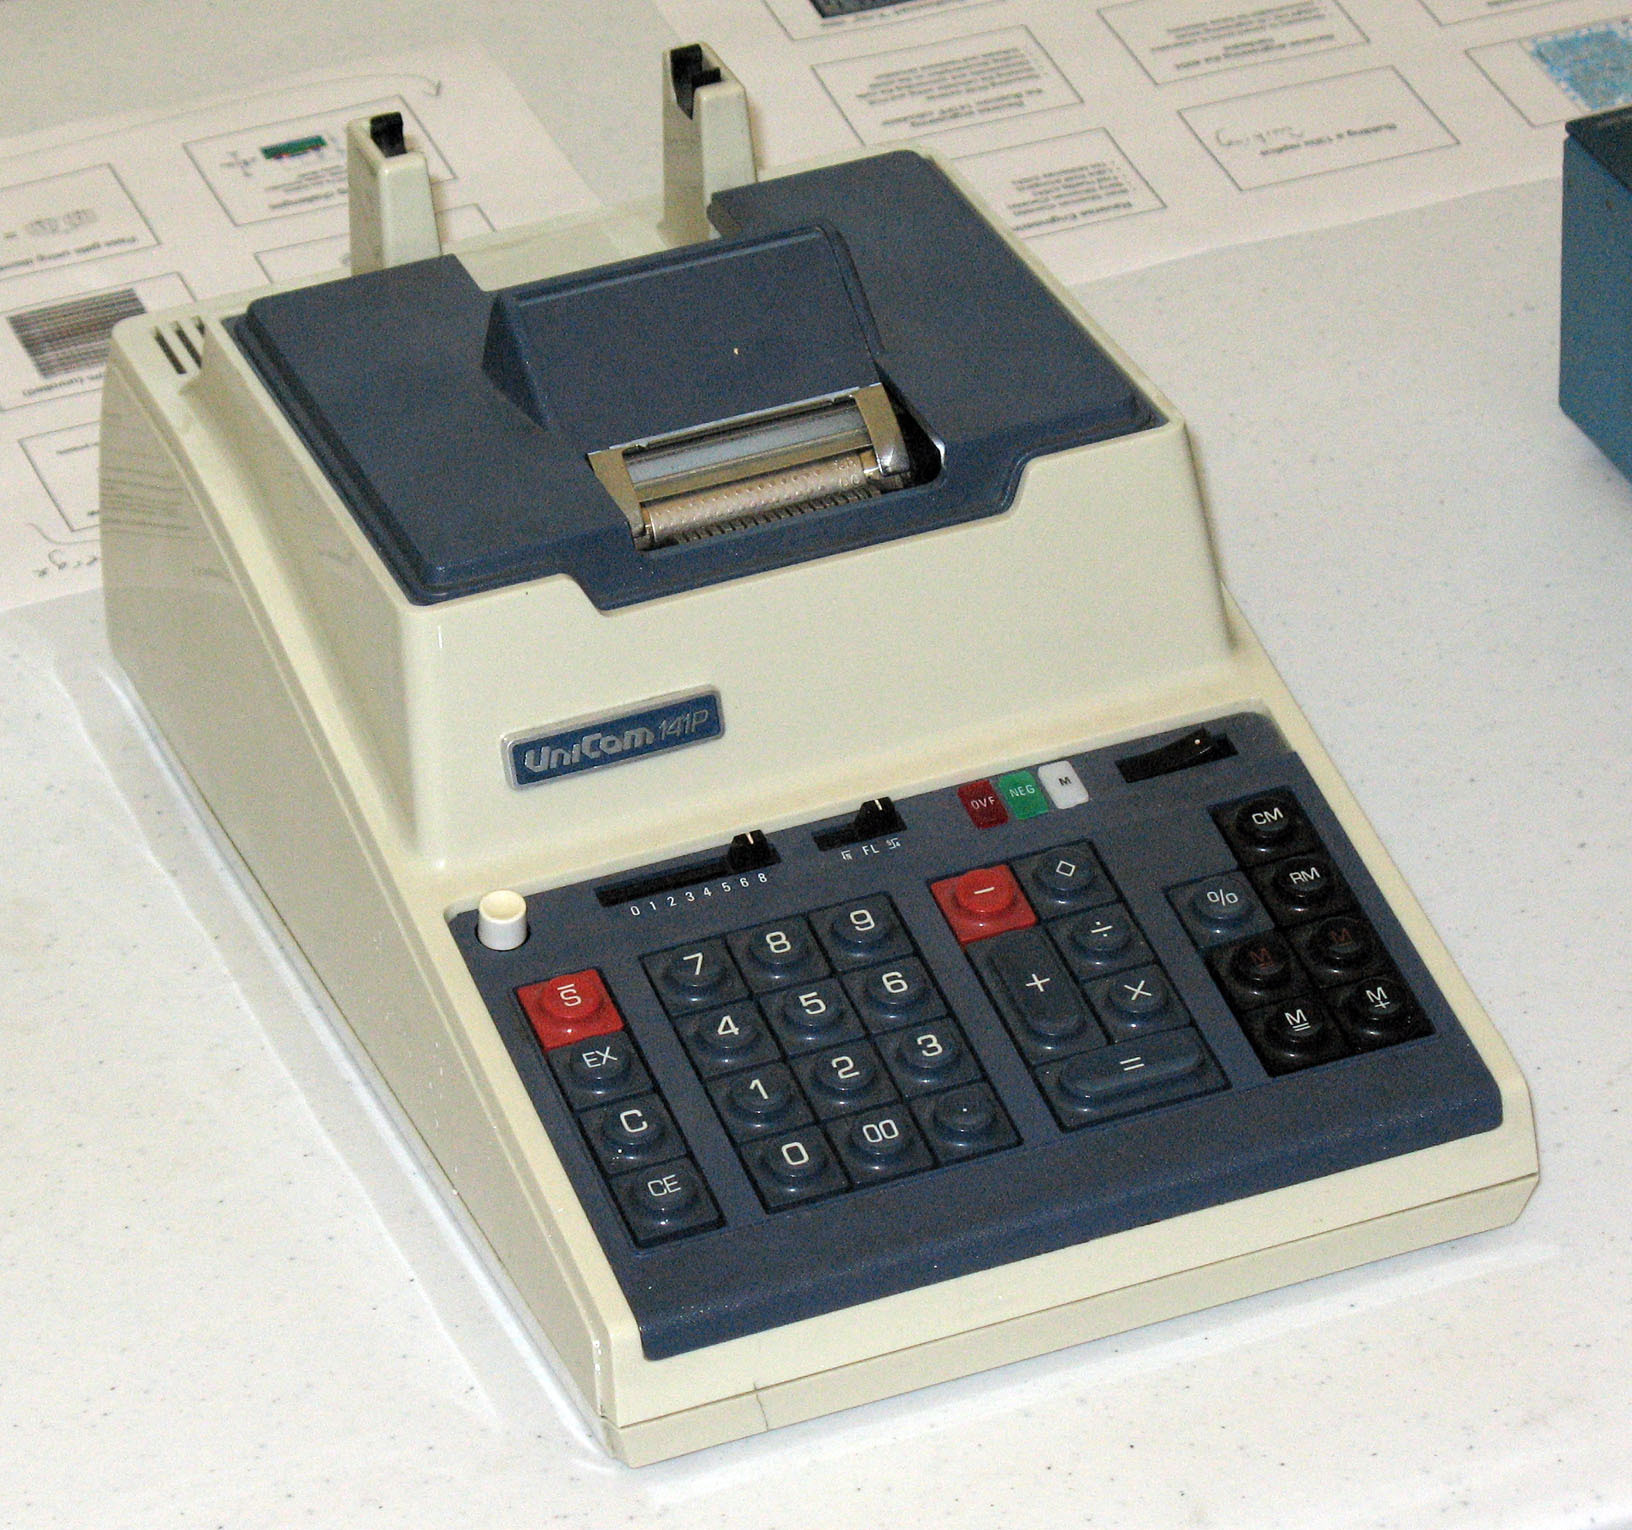 Unicom 141P Calculator, photo by Michael Holley.